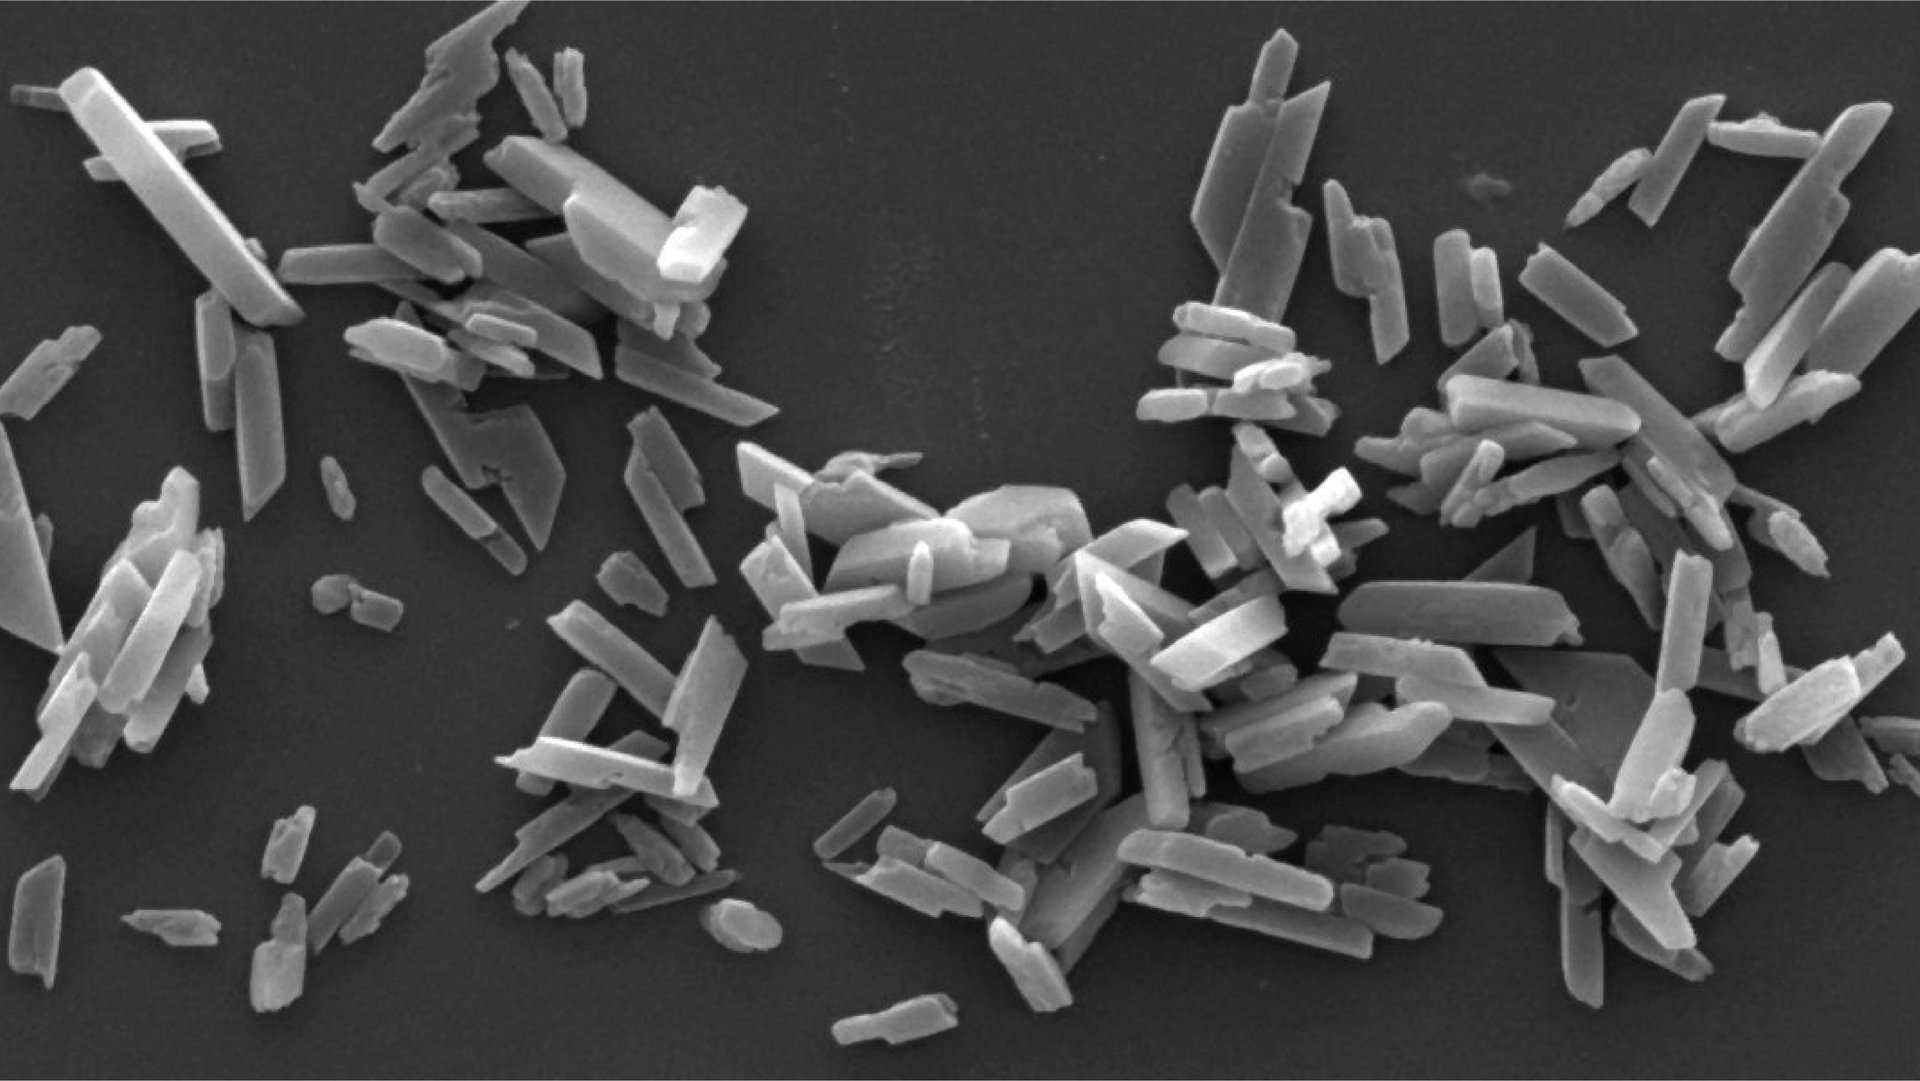 Image shows an electron microscopy image